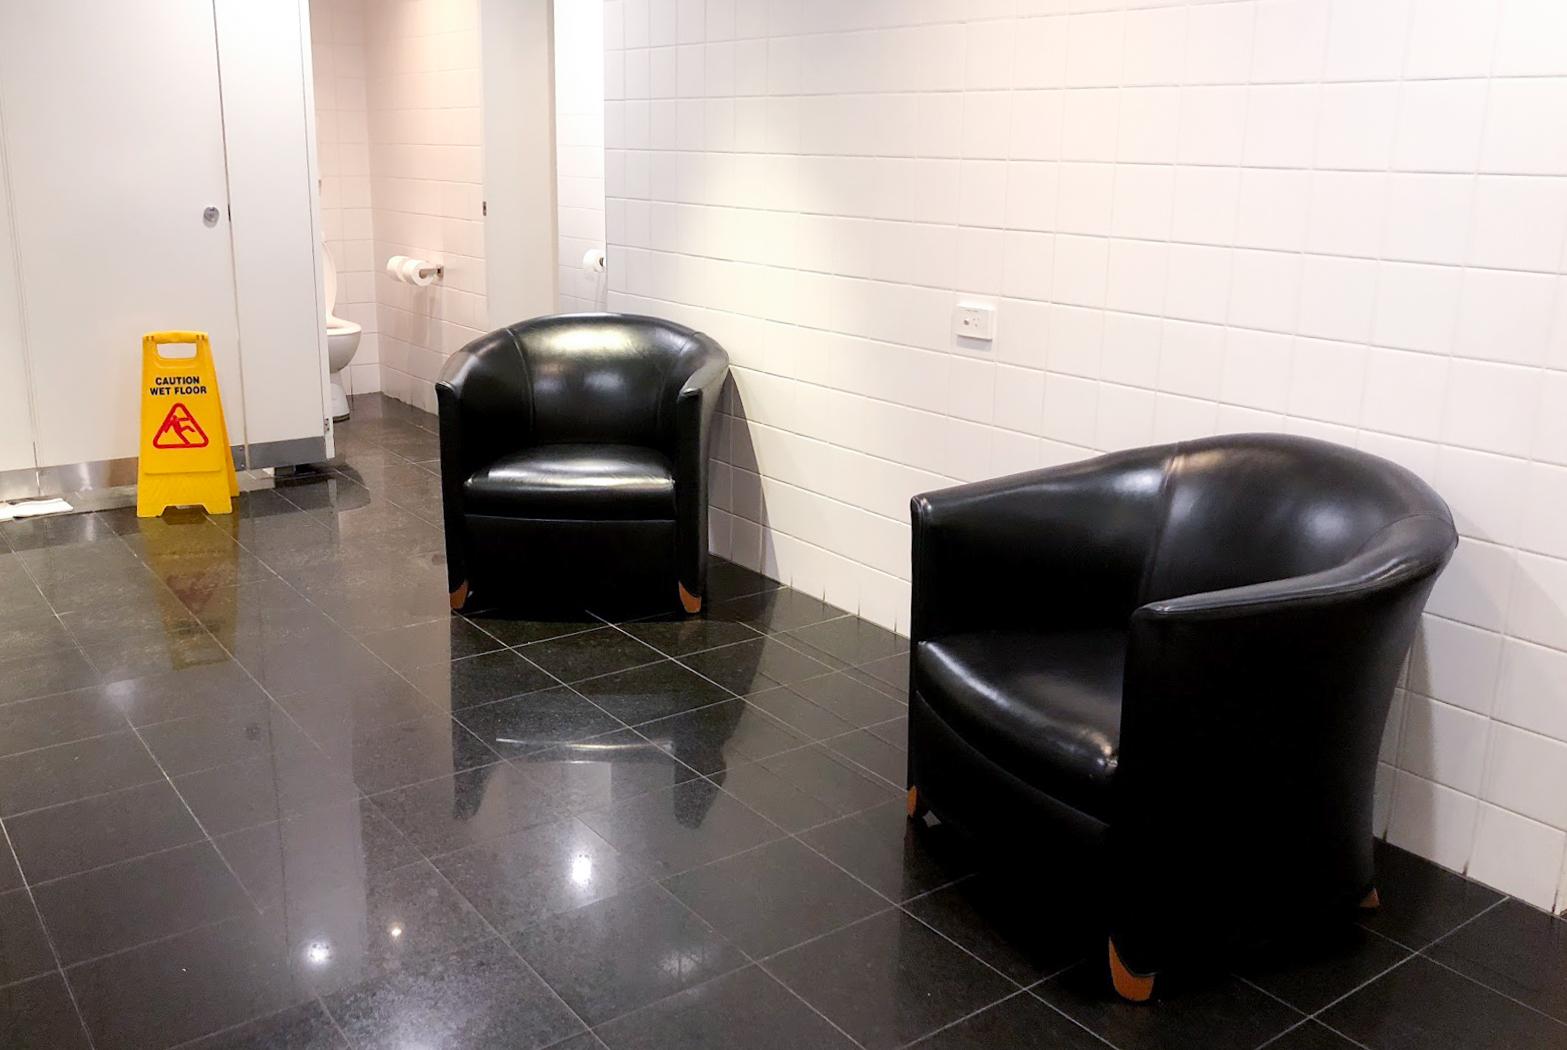 Qantas Club Sydney mysterious chairs in the bathroom